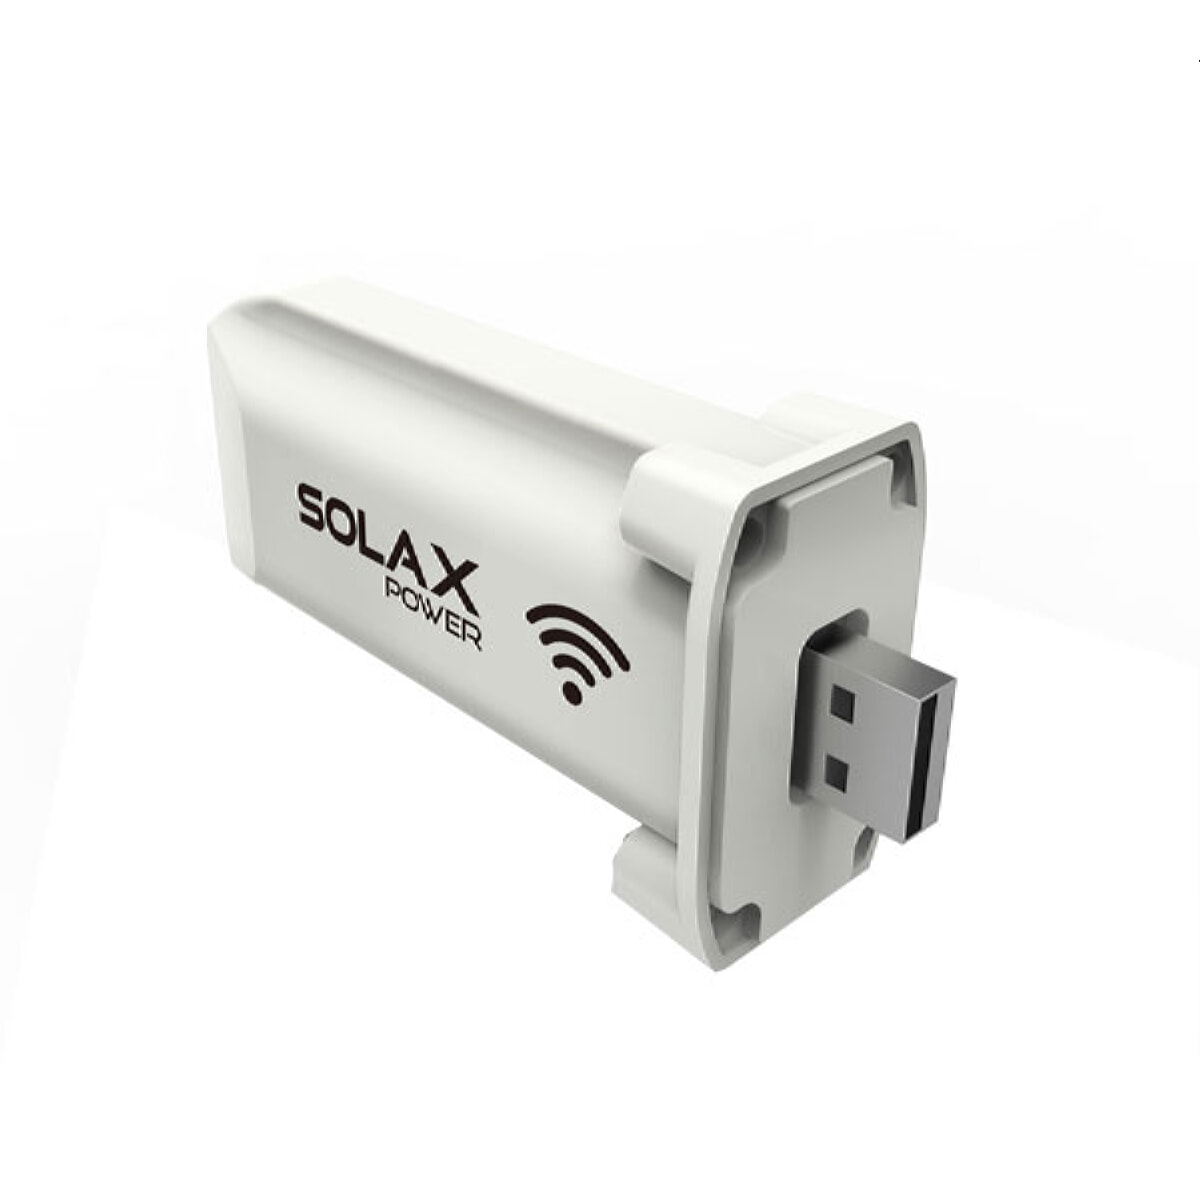 SolaX Pocket WiFi 2.0 Monitoring Dongle